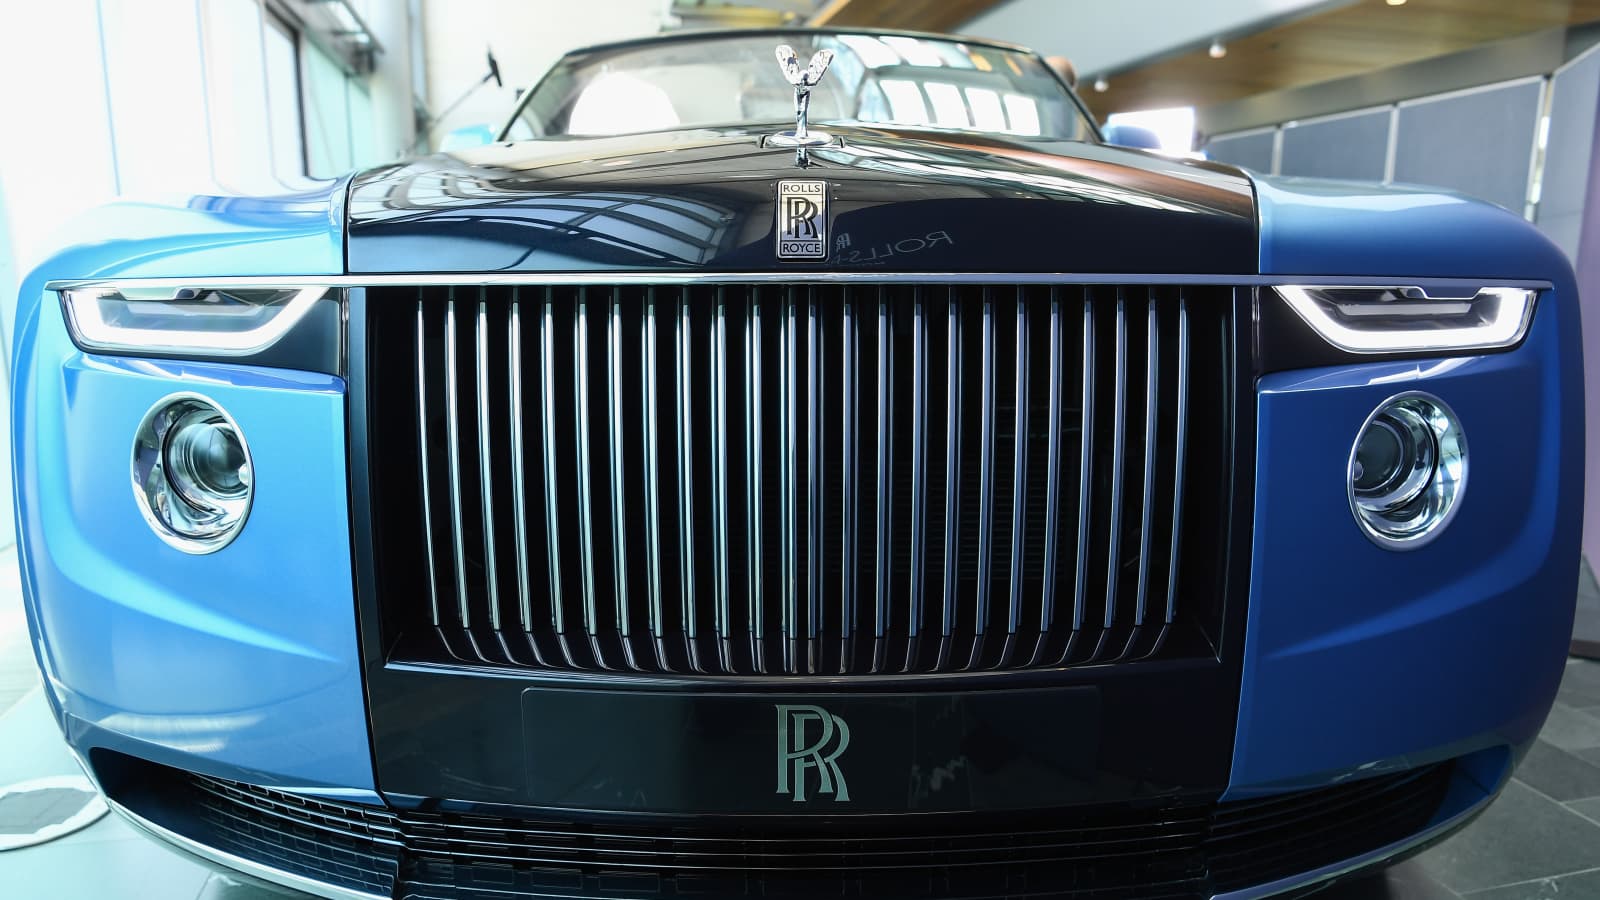 Rolls-Royce reveals ultra-exclusive Boat Tail model